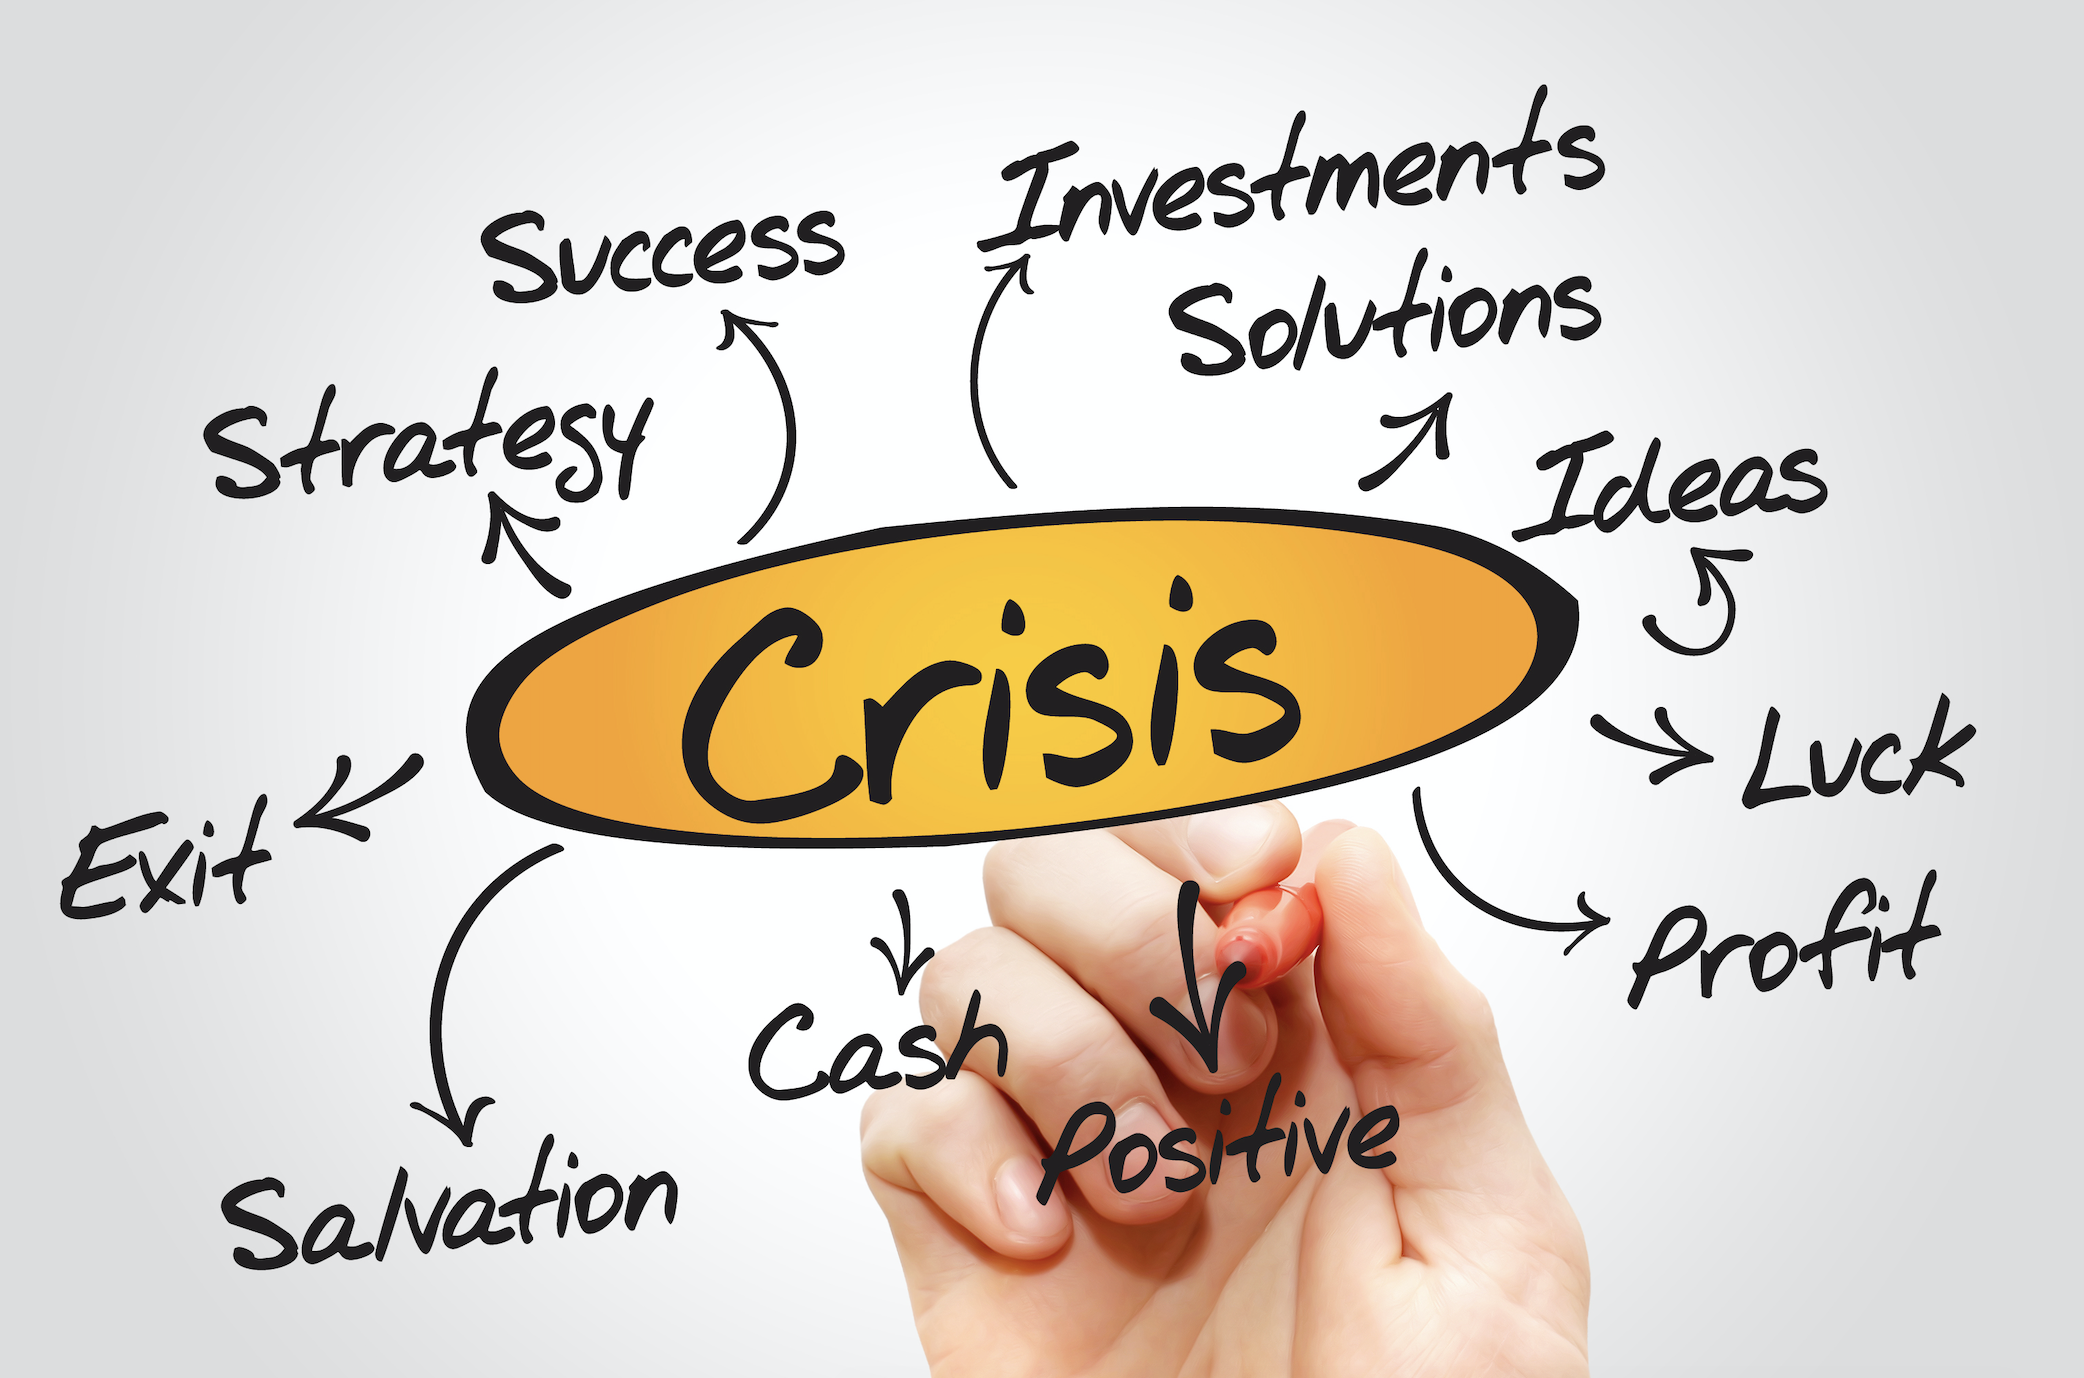 stress crisis and change management essay